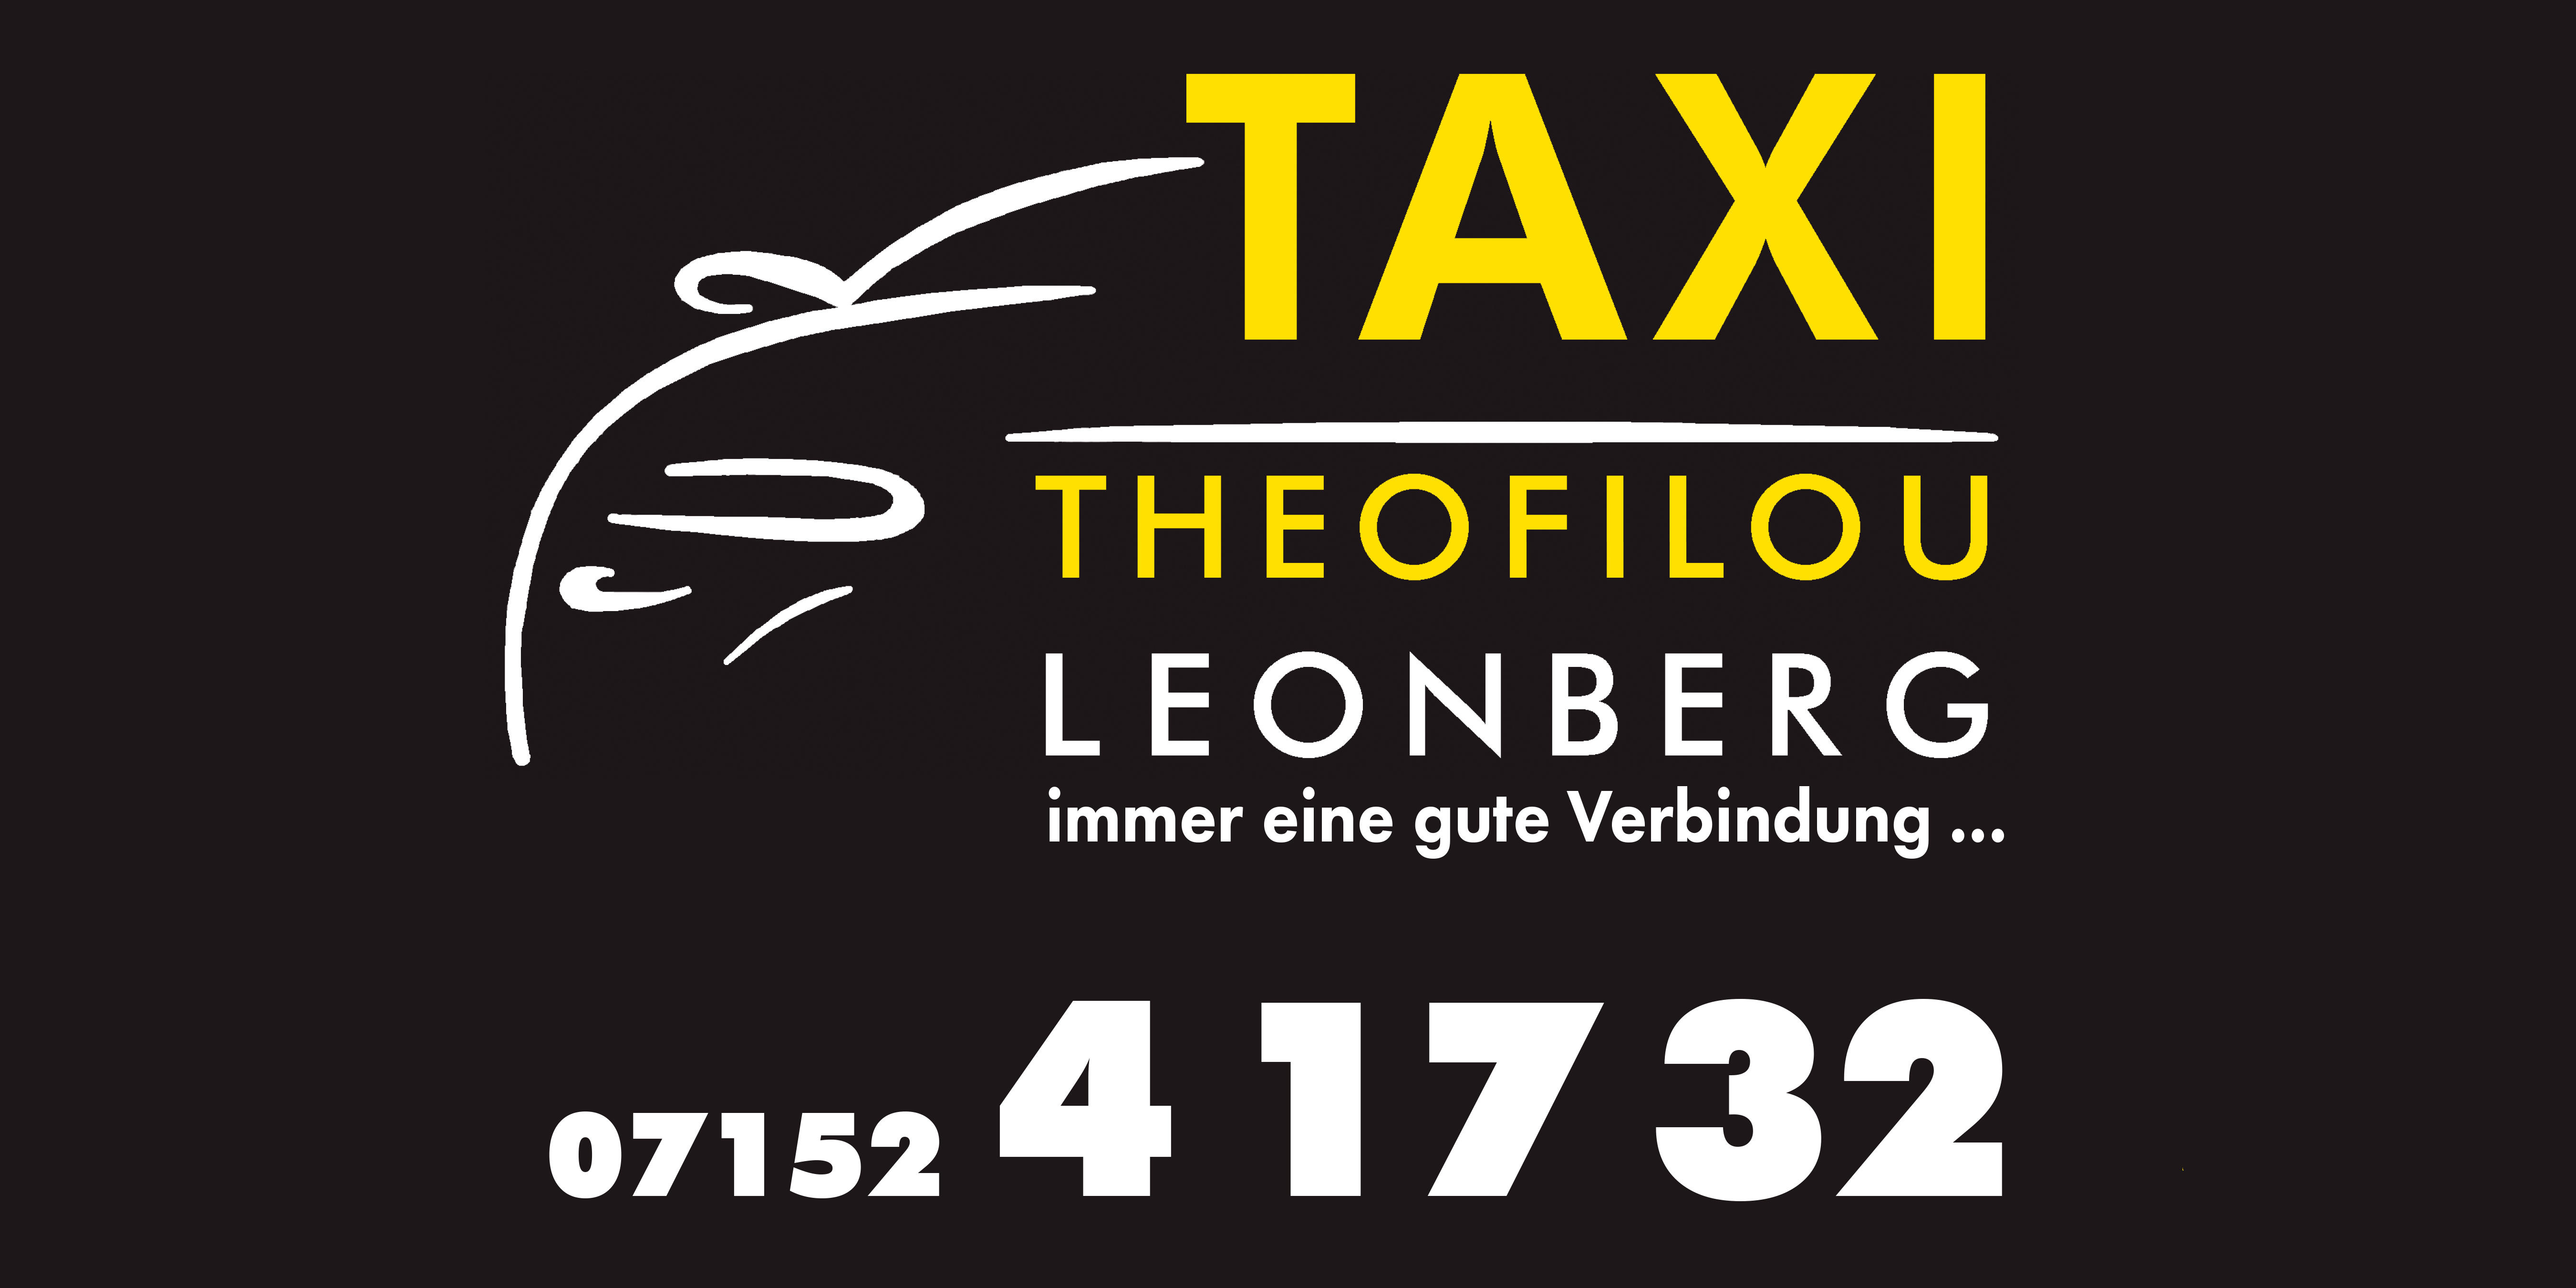 Kundenbild groß 2 TAXI Theofilou Leonberg